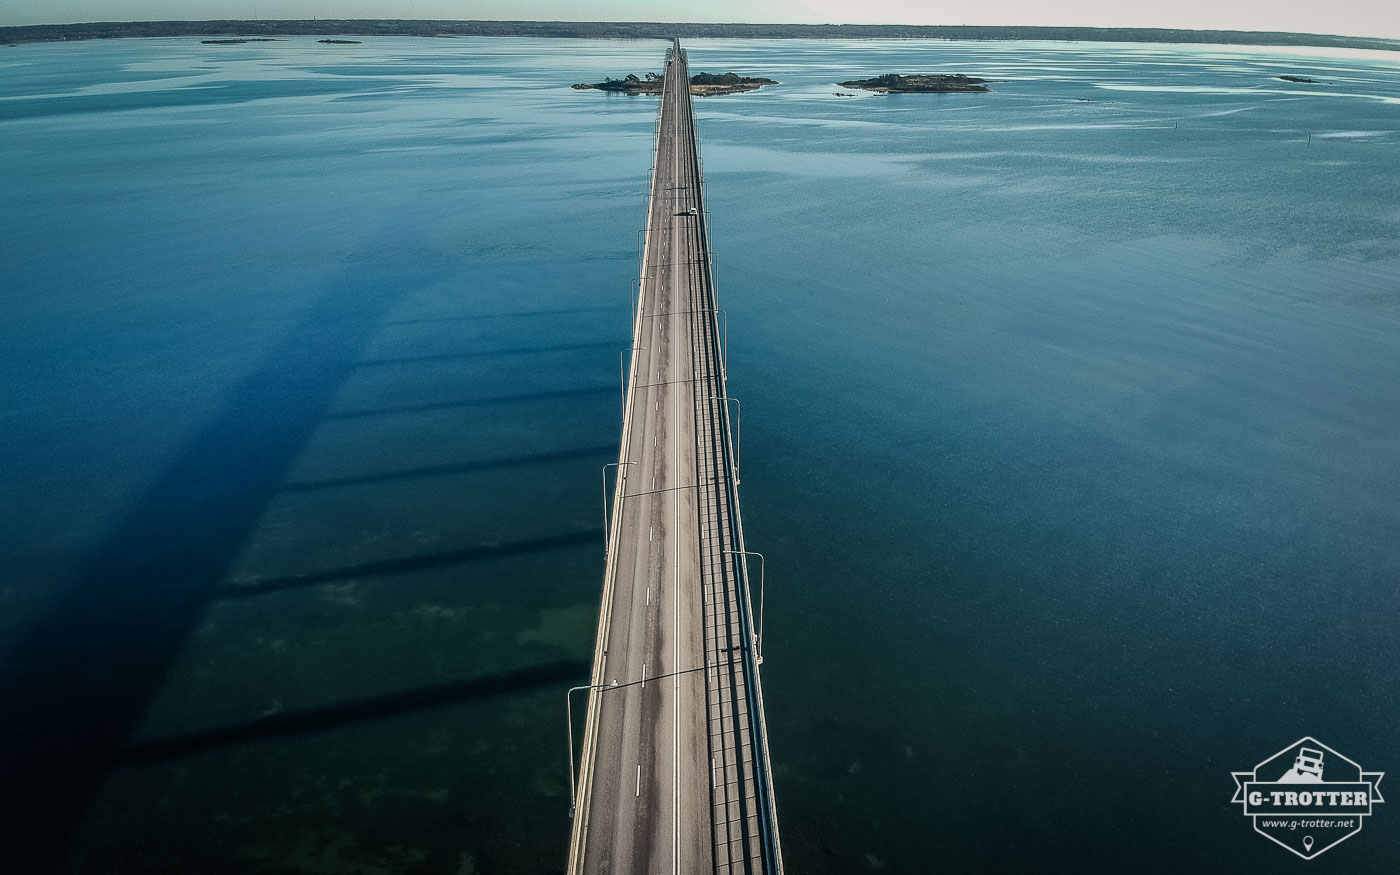 Bridge from the Swedish mainland to the island of Öland.